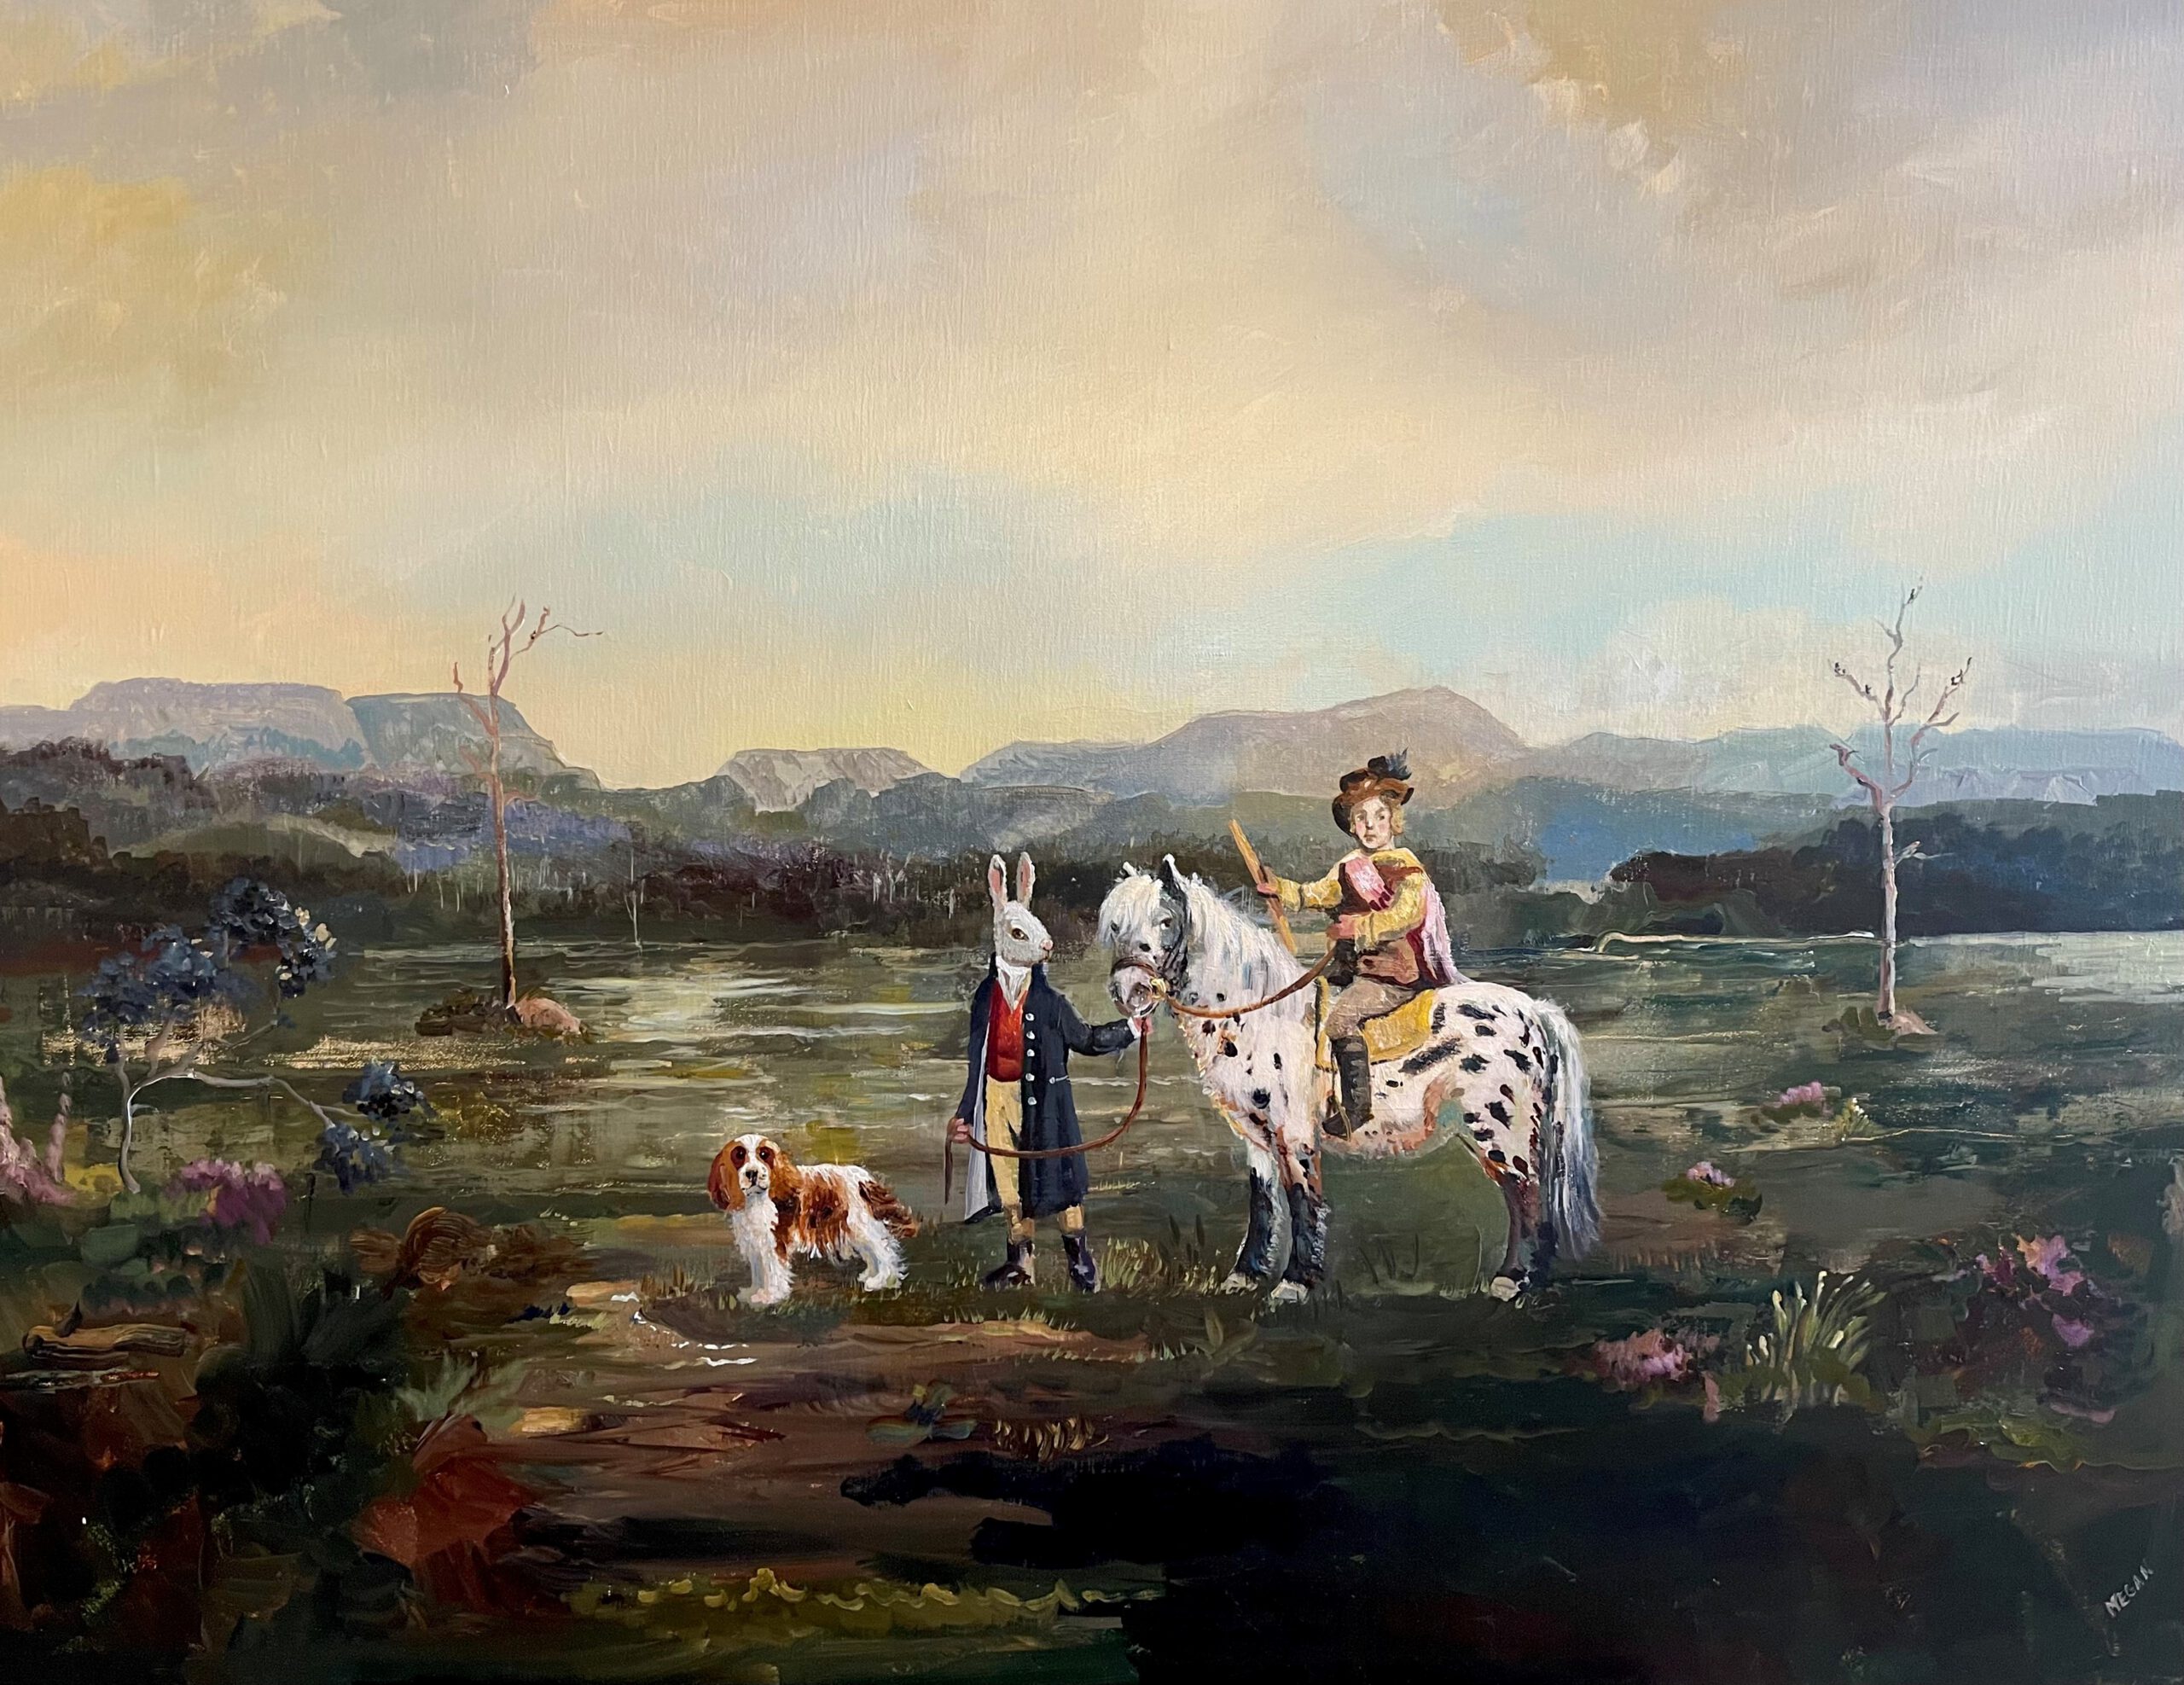 Melissa Egan 'Autumn Stroll at the Great Lakes' oil on canvas 92 x 125cm $15,000